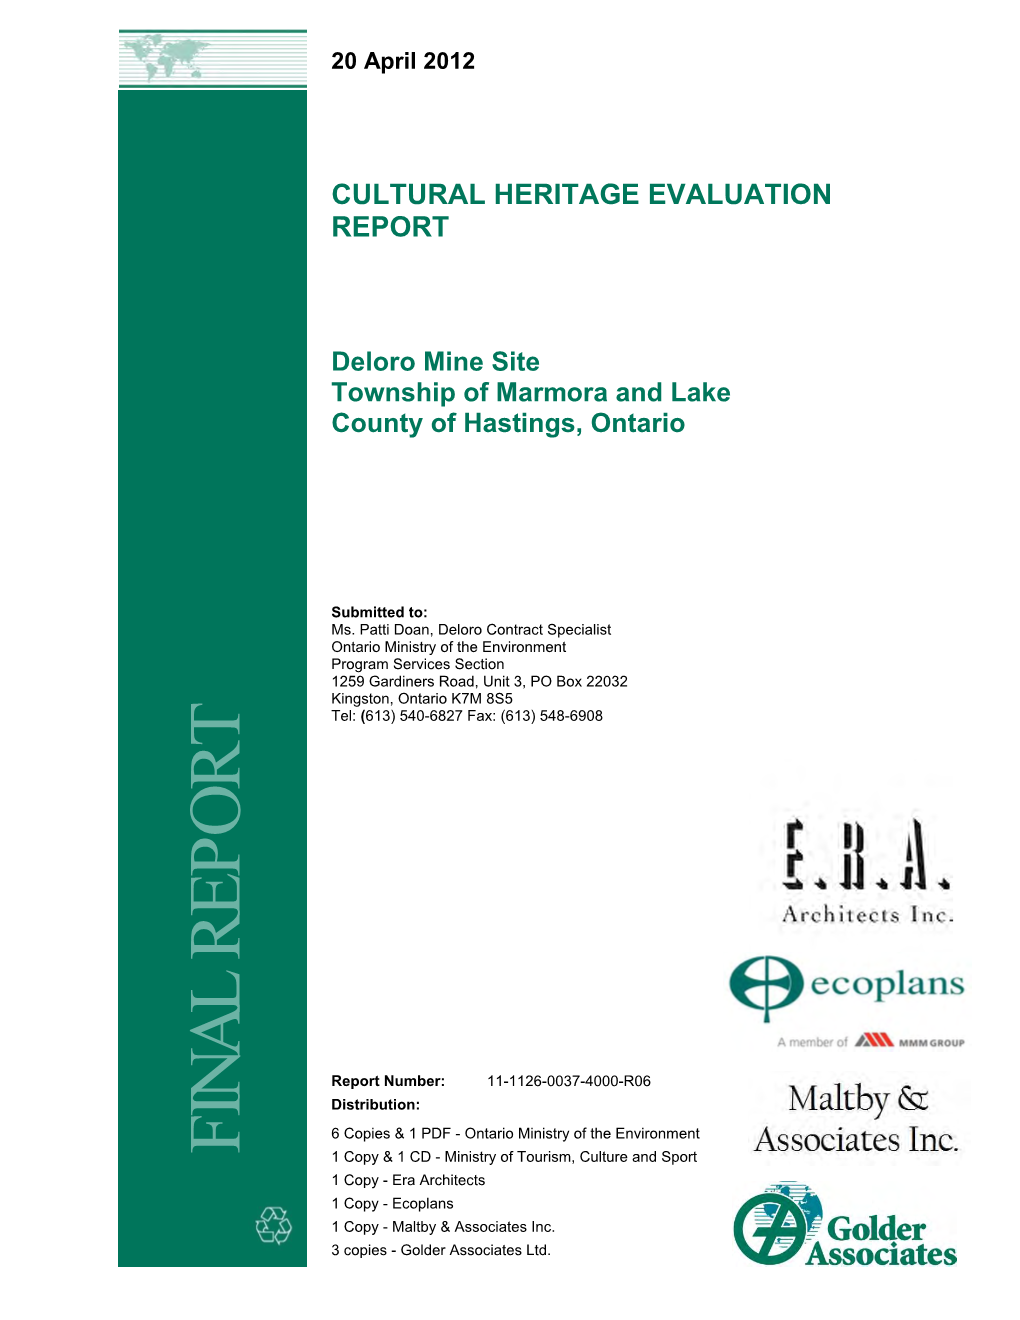 Cultural Heritage Evaluation Report